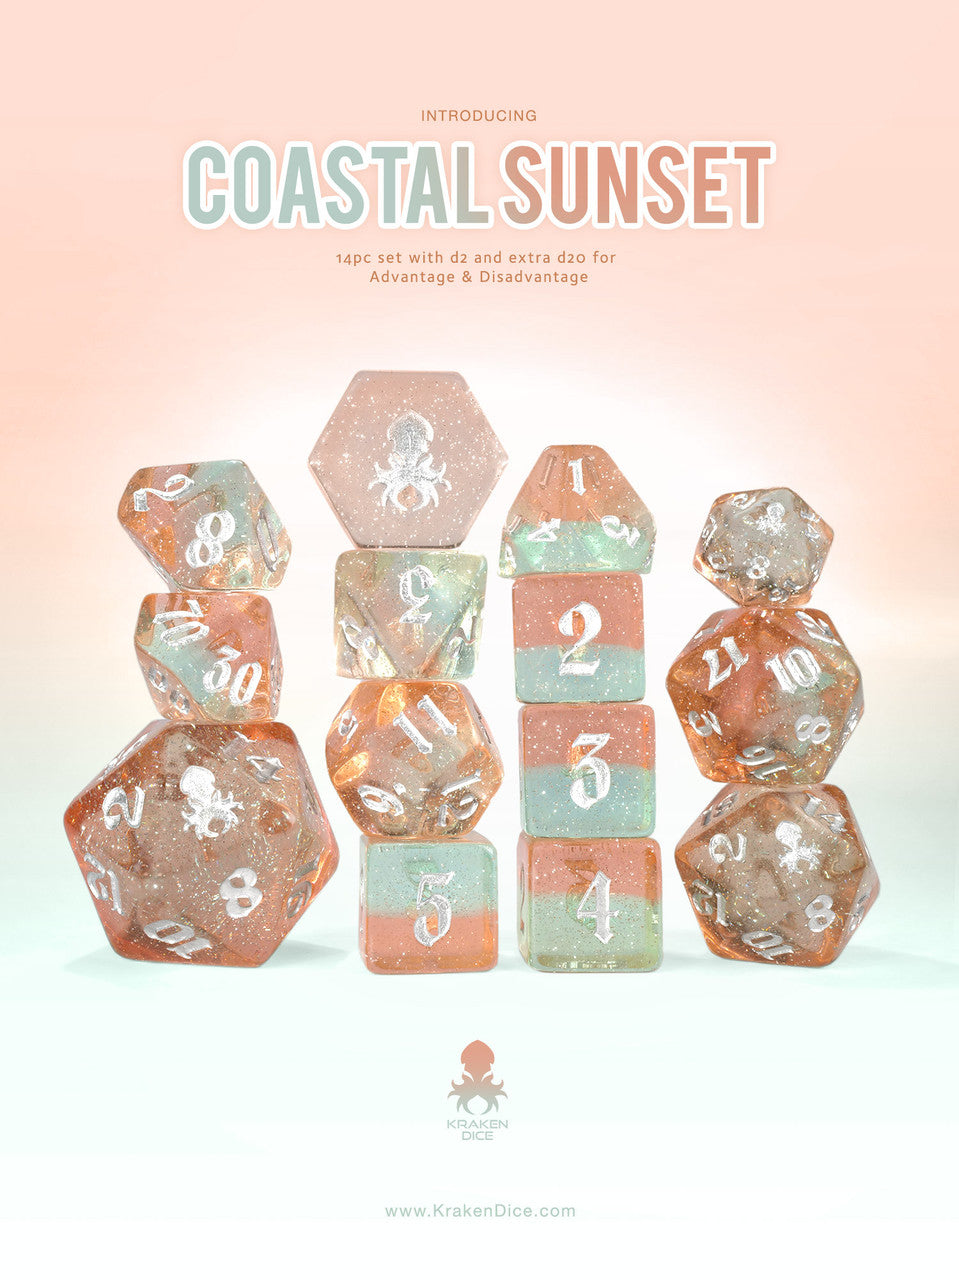 Coastal Sunset 14pc Dice Set